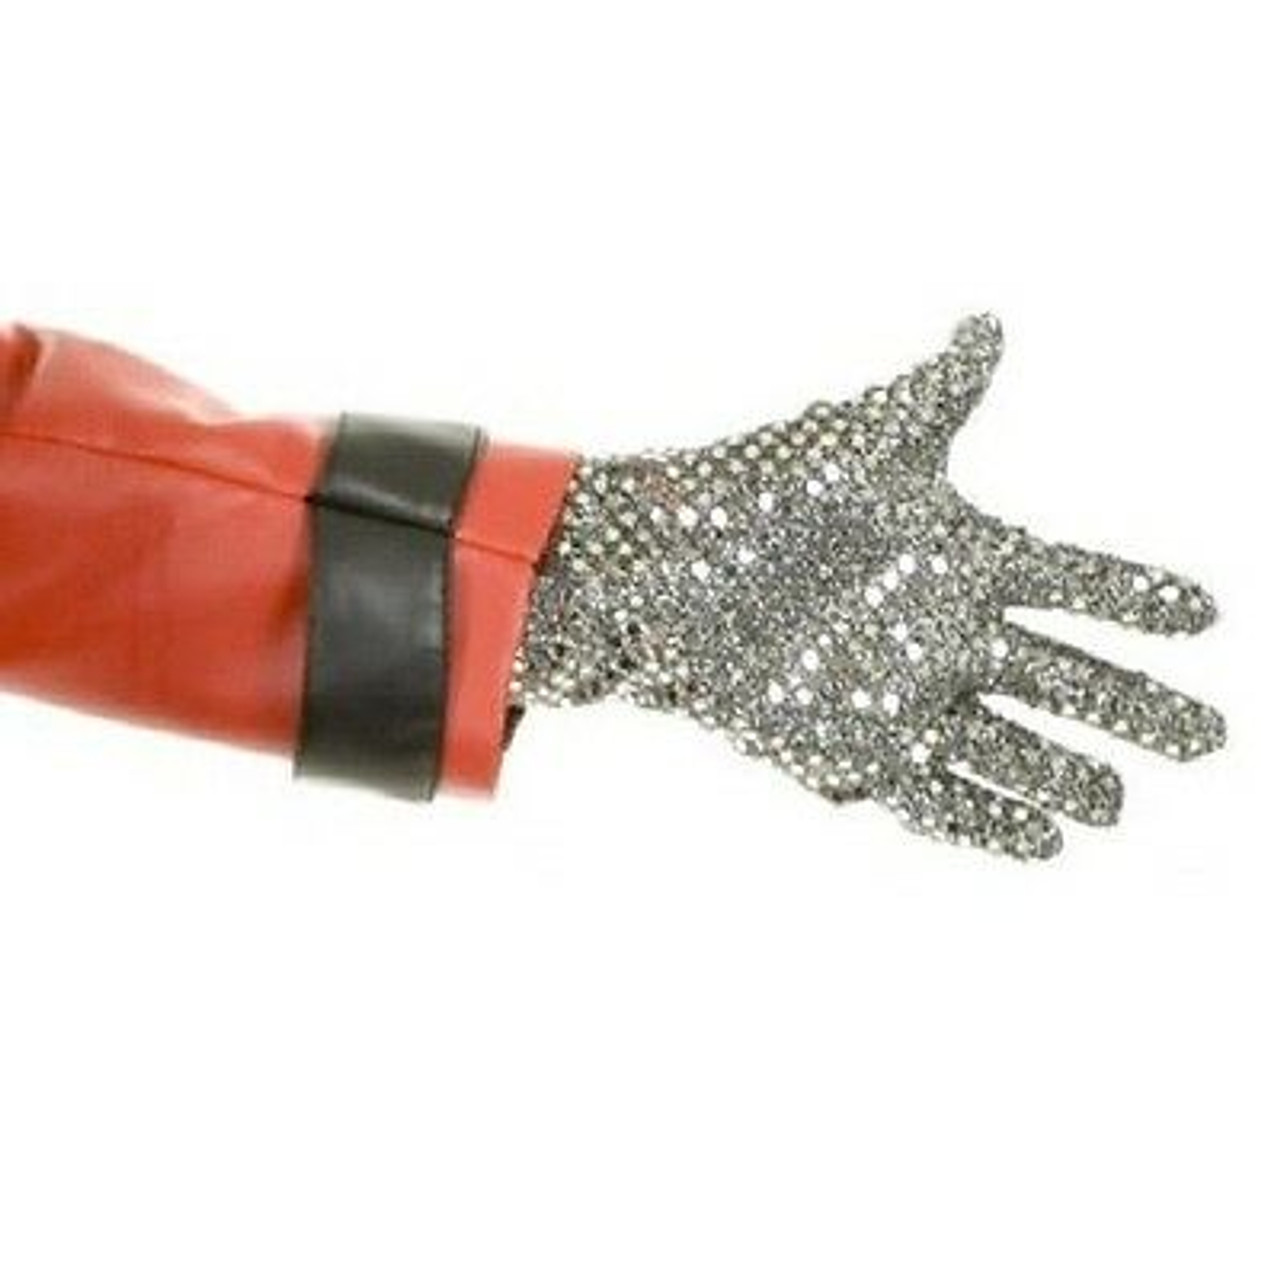 Dance Sequin Gloves Michael Jackson Costume Cosplay Party Halloween Wrist  Gloves